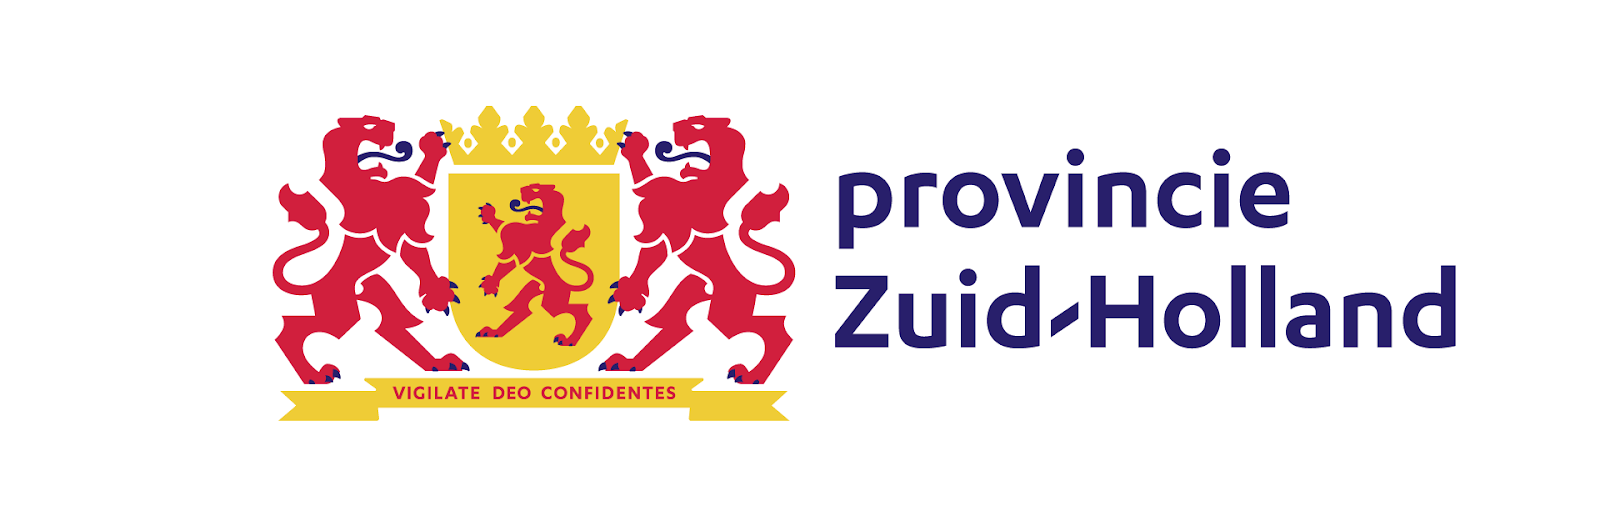 provincie Zuid Holland Logo